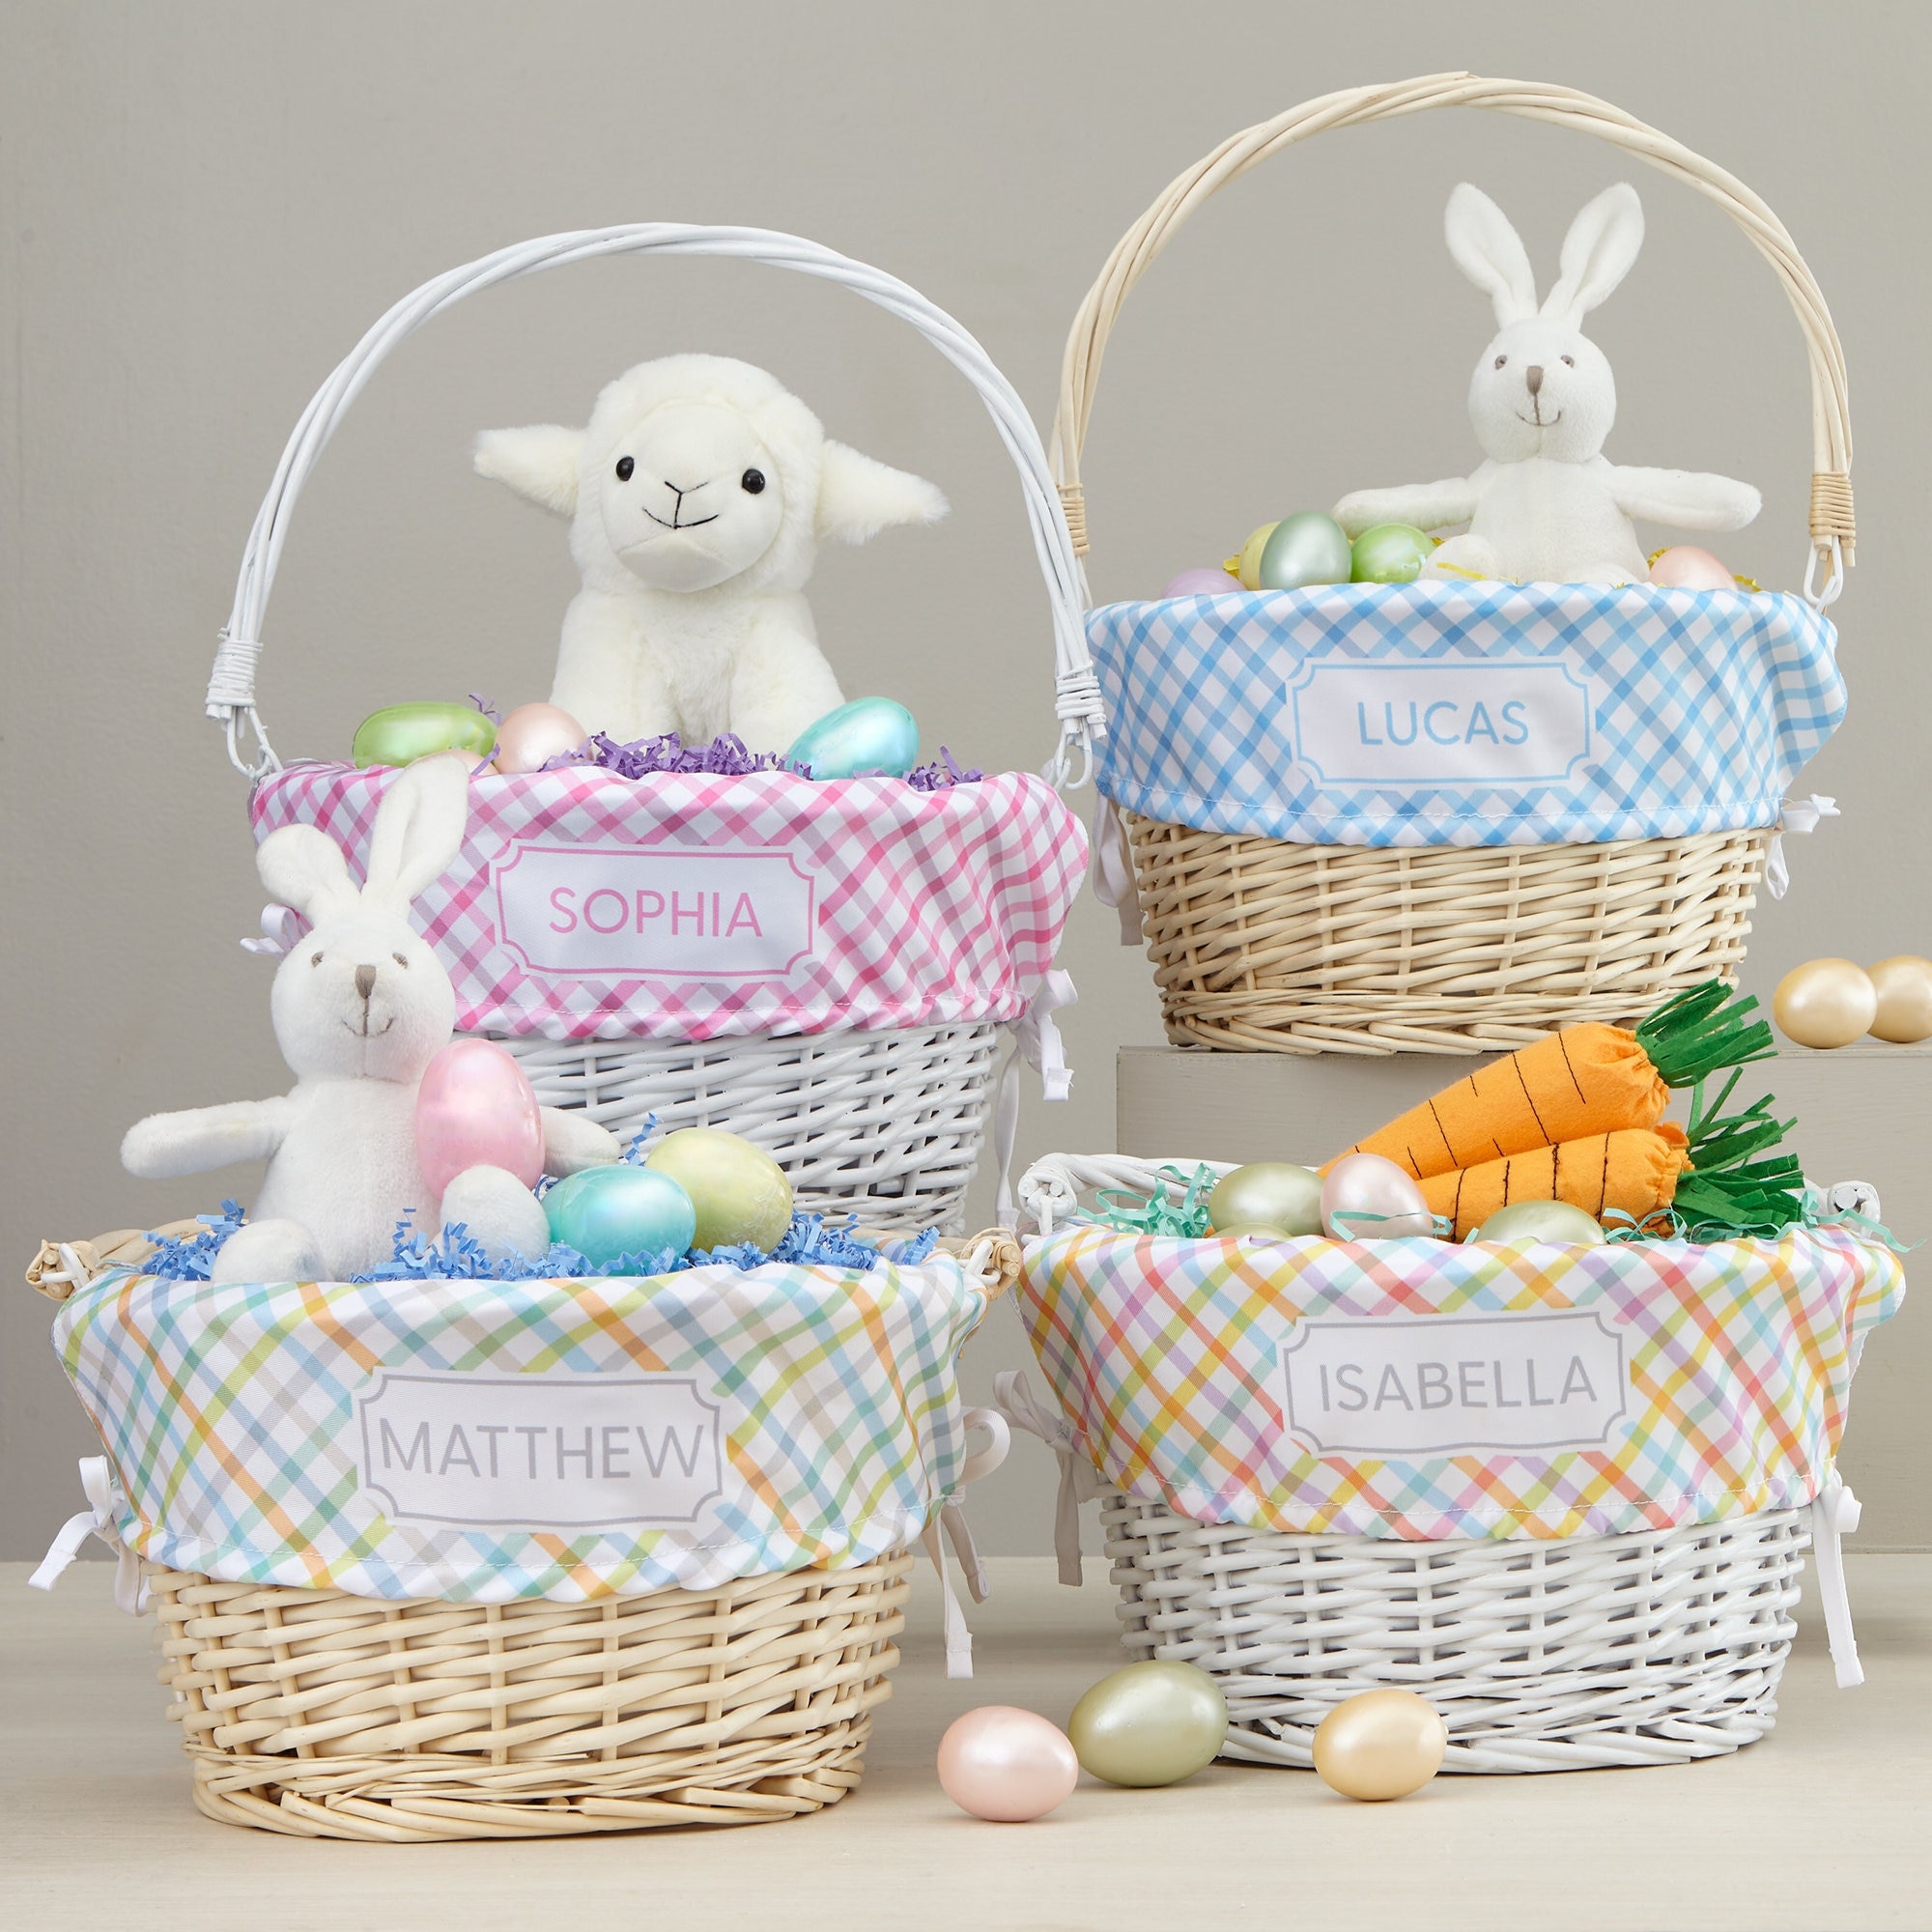 Wicker Woven Braided Gift Basket For Easter, Baby Shower, Wedding